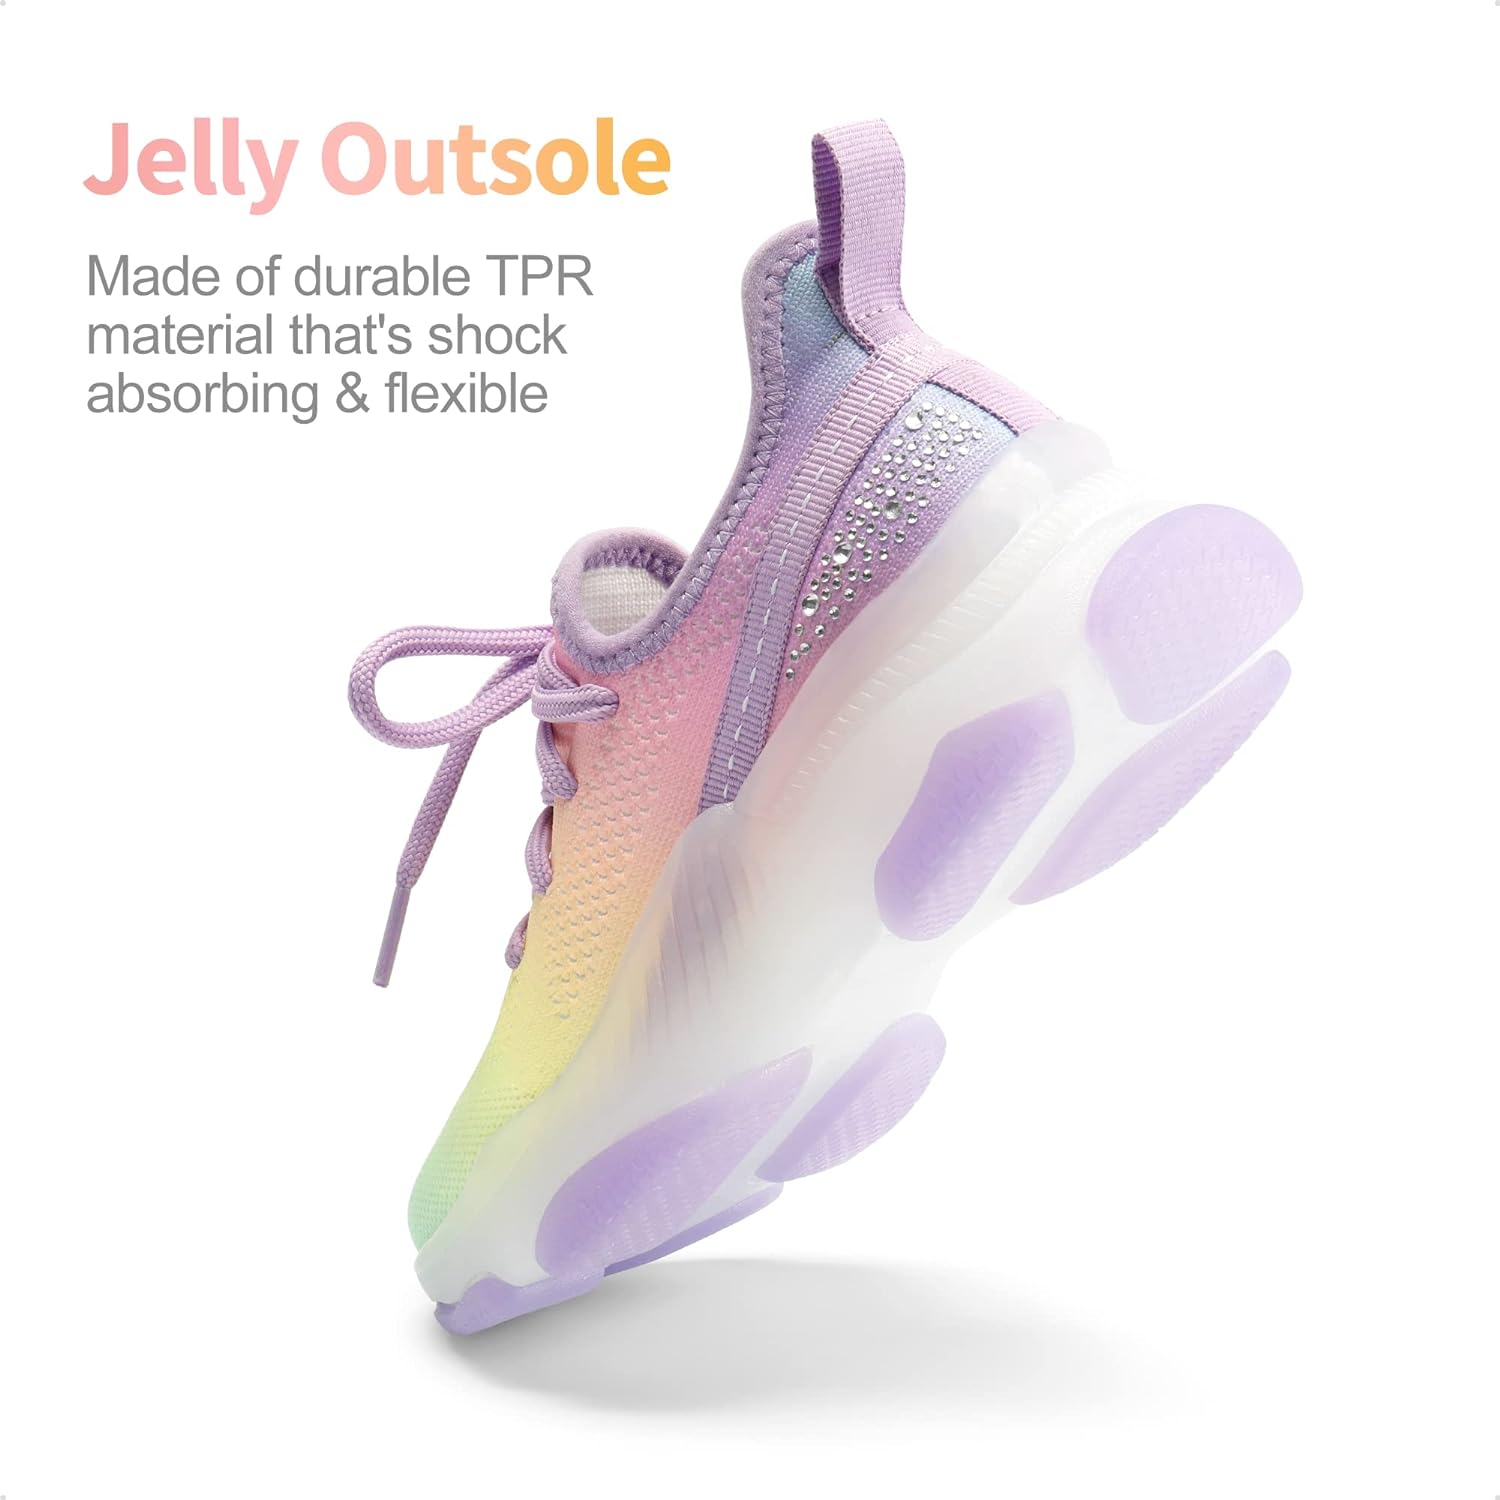 DREAM PAIRS Girls Slip-On Sneakers Kids Lightweight Jelly Sole Walking Shoes